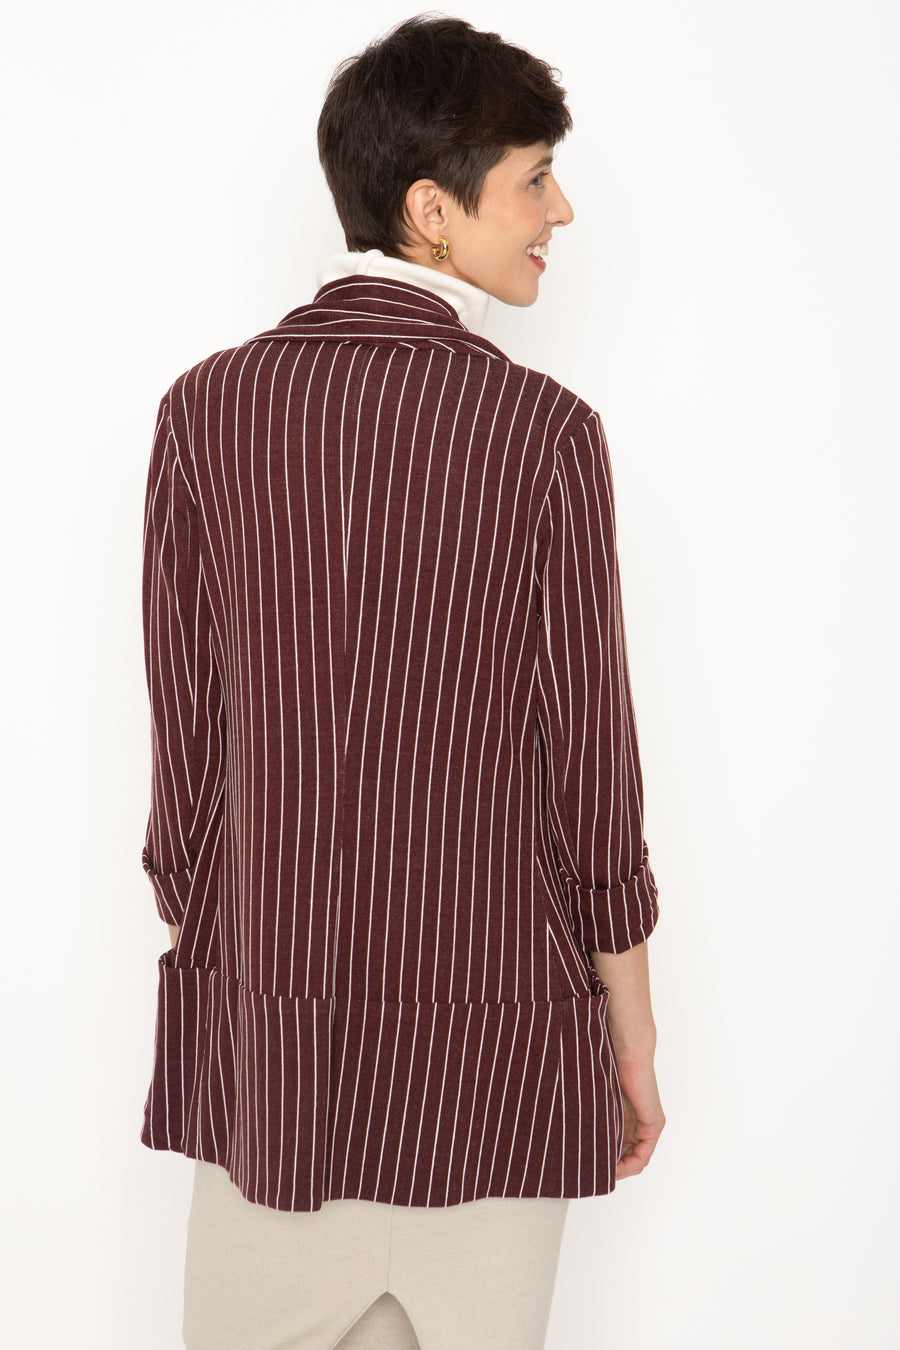 No Srcipt image - Images of 4 of 7 Classic Melanie Shawl Simple Staple Burgundy Striped Workwear Blazer Jacket Stripes Everyday Shawl Front Pockets Best Seller Customer Favorite